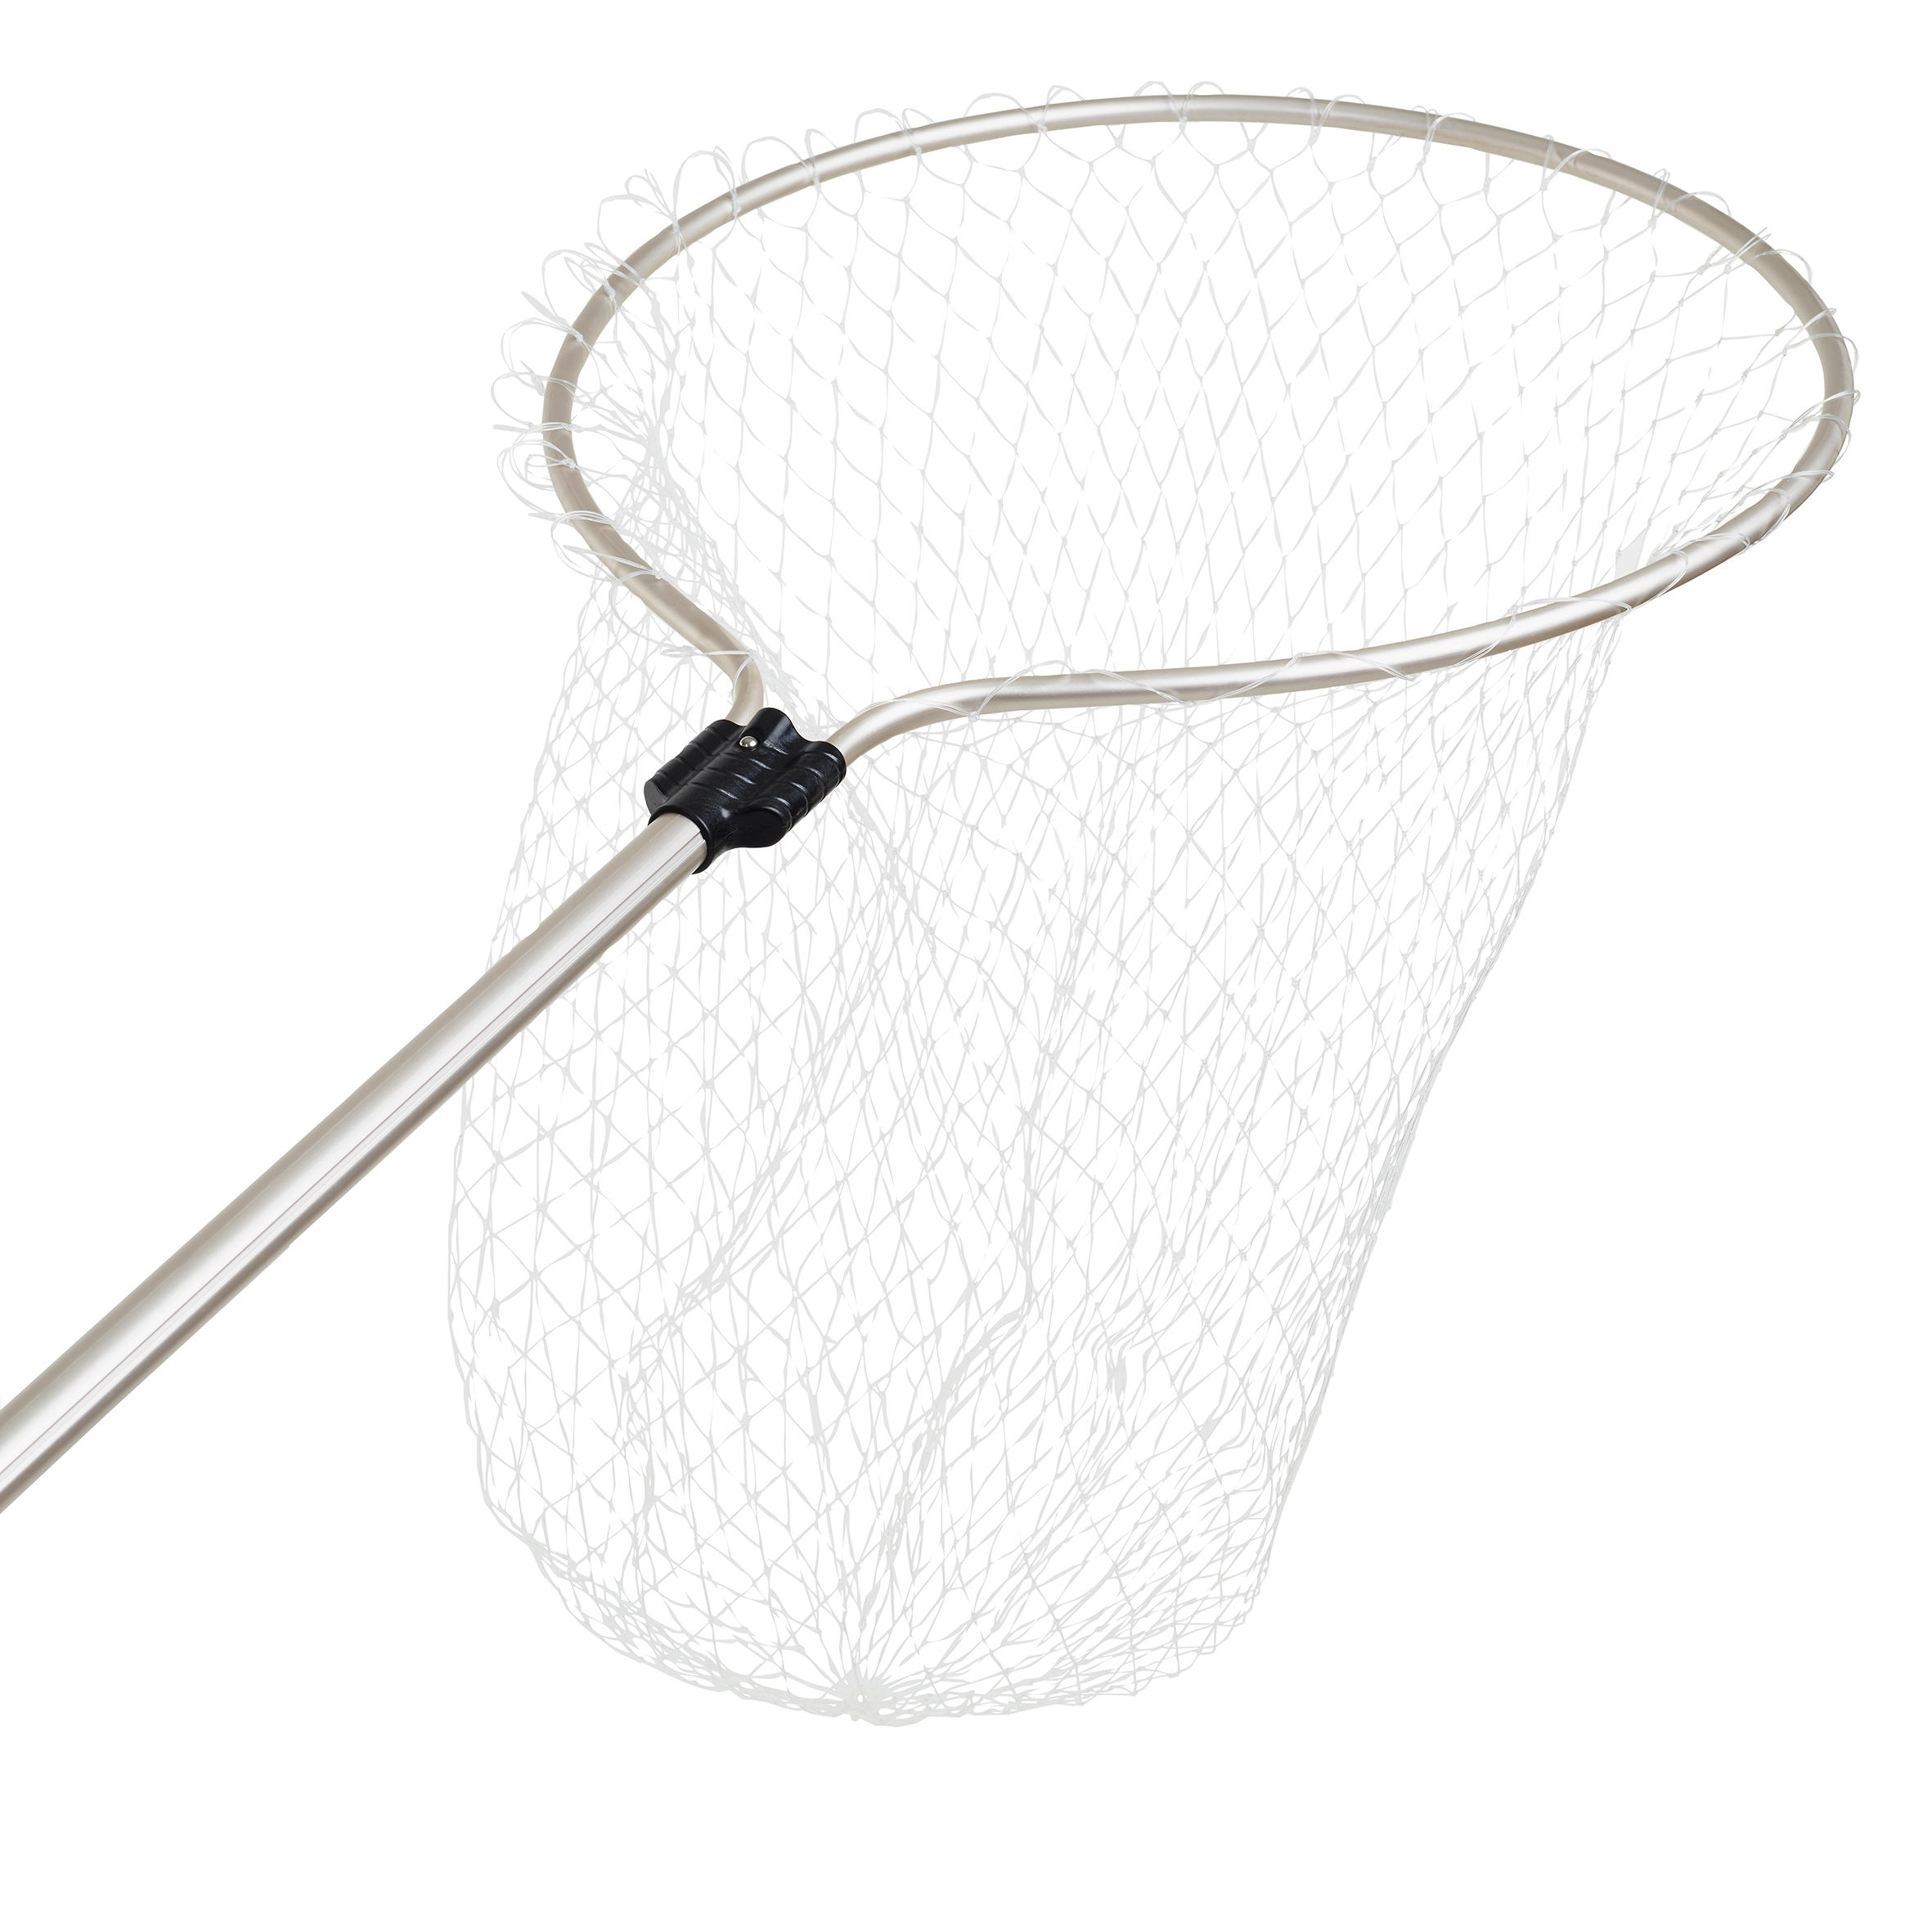 Fishing Landing Net 190cm - One Size By CAPERLAN | Decathlon